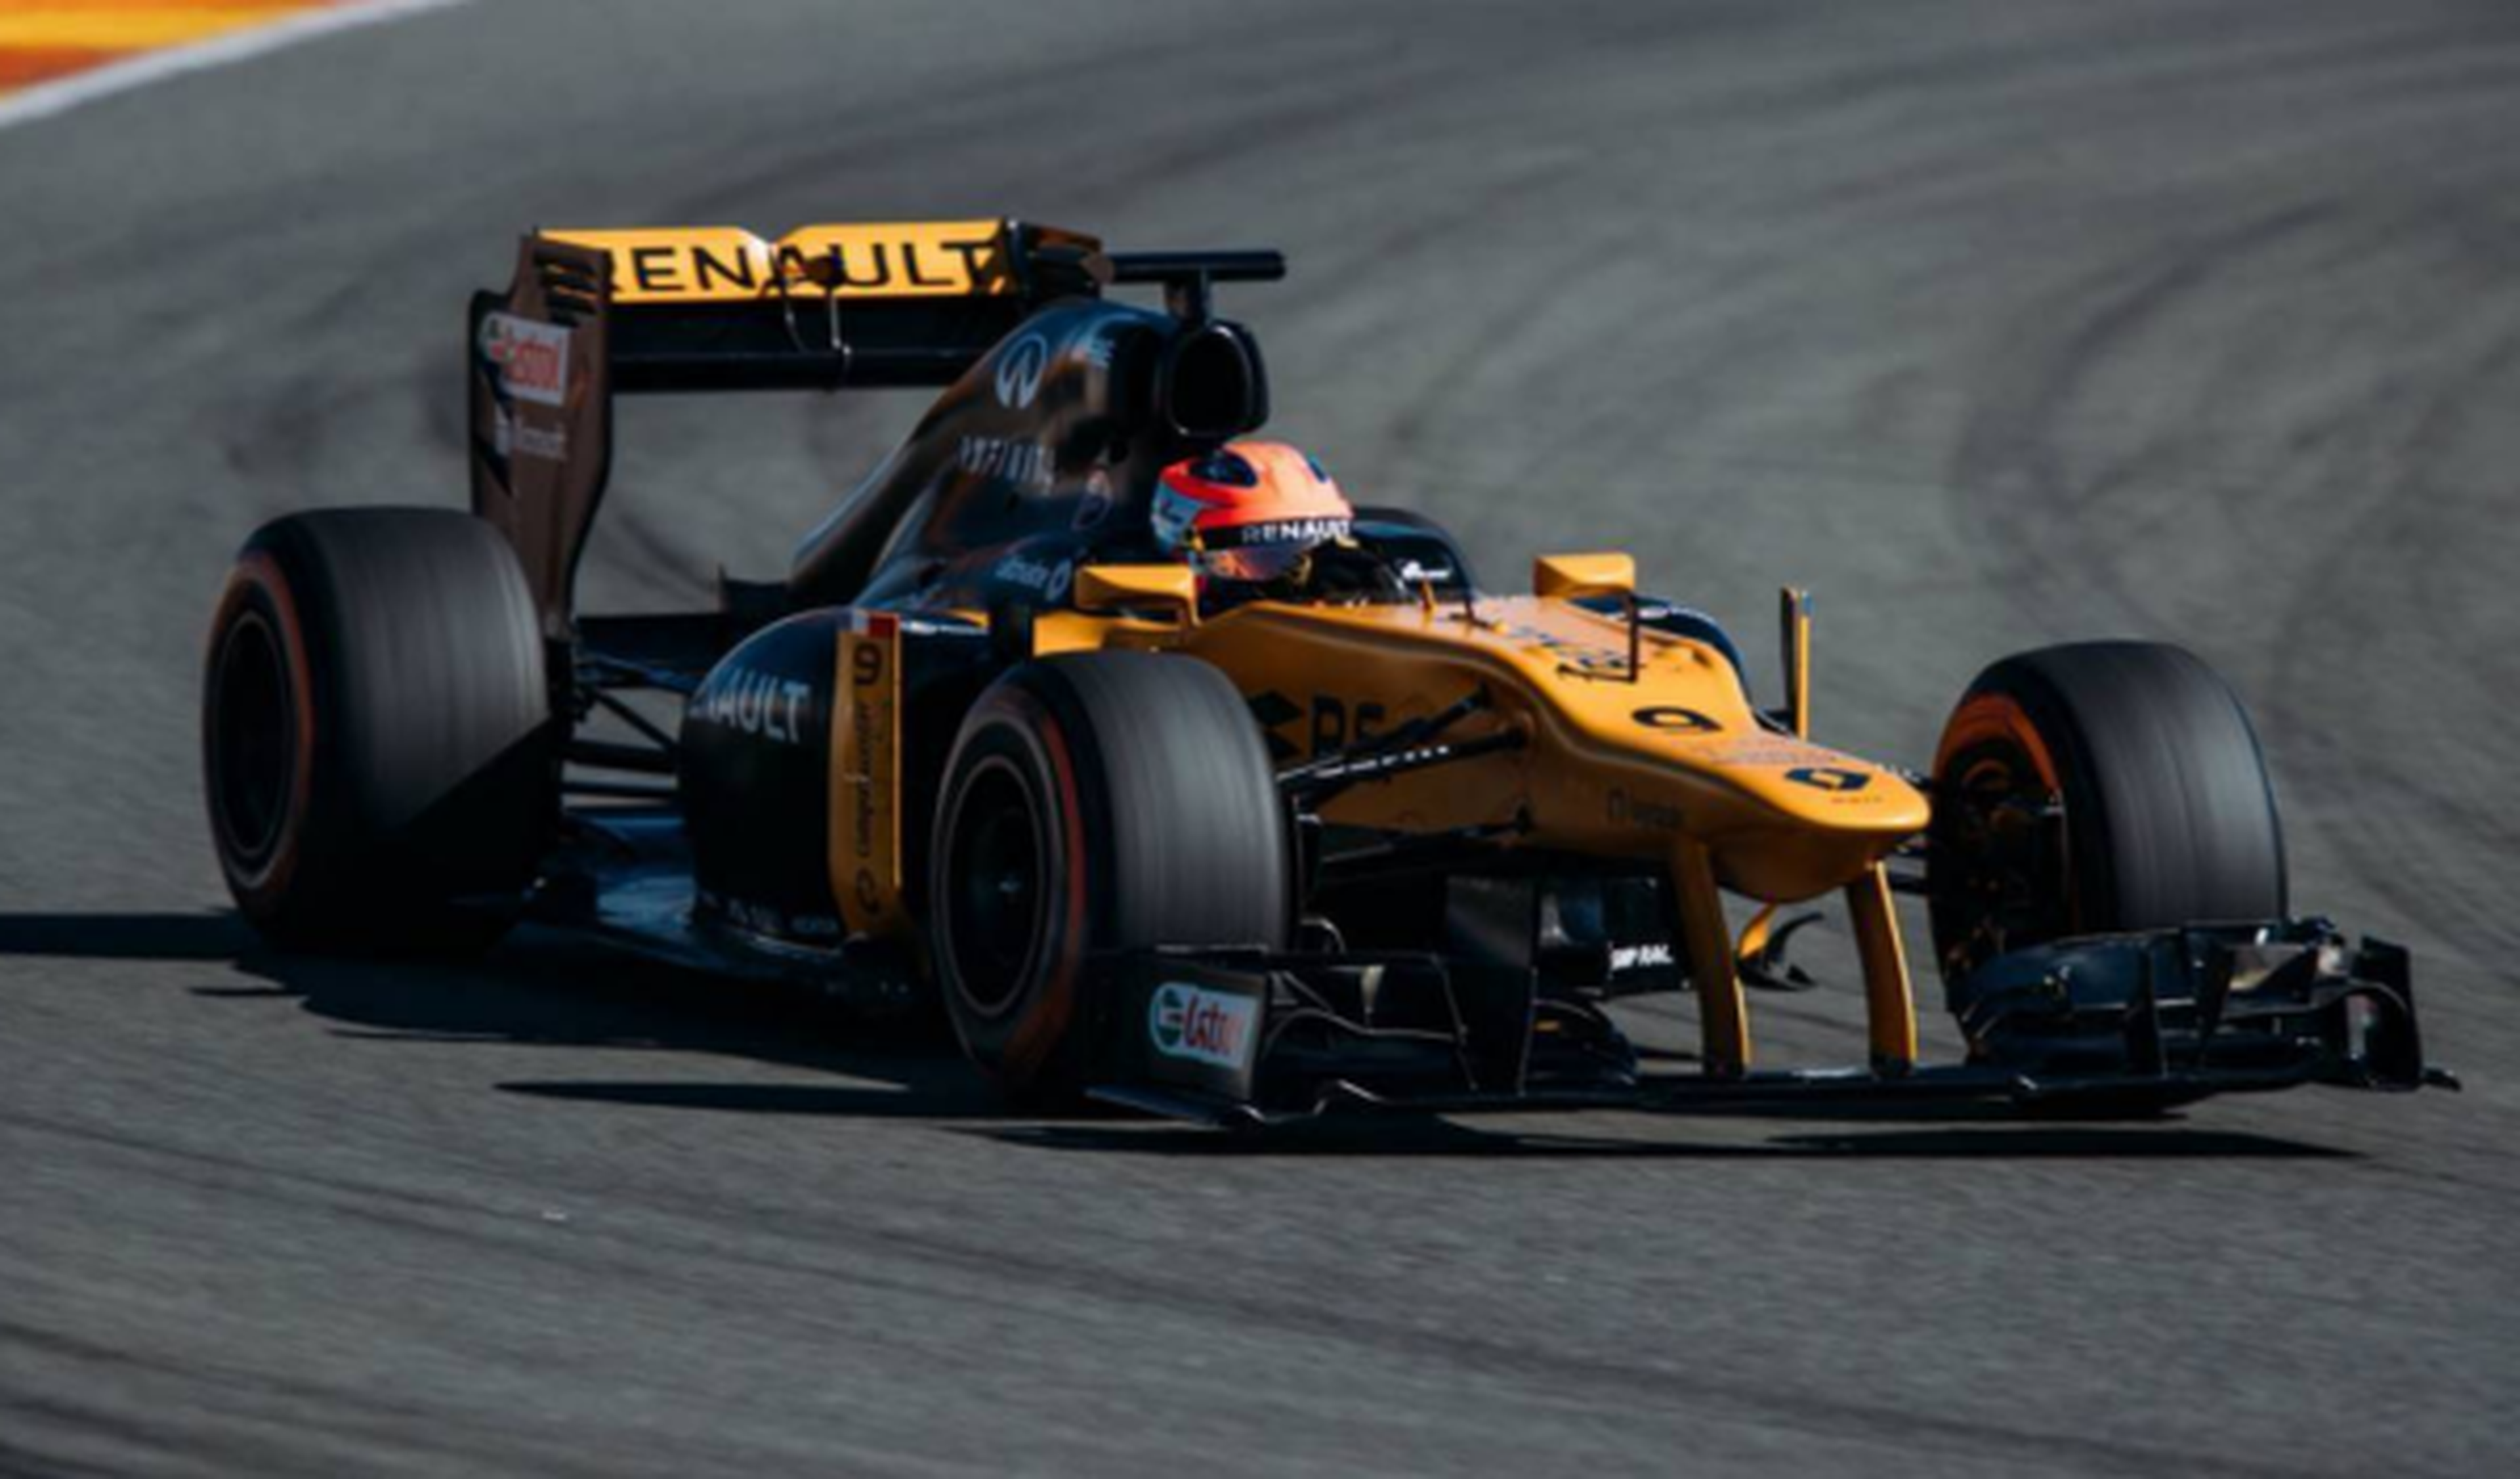 Kubica pilotará un Renault F1 en el Festival de Goodwood